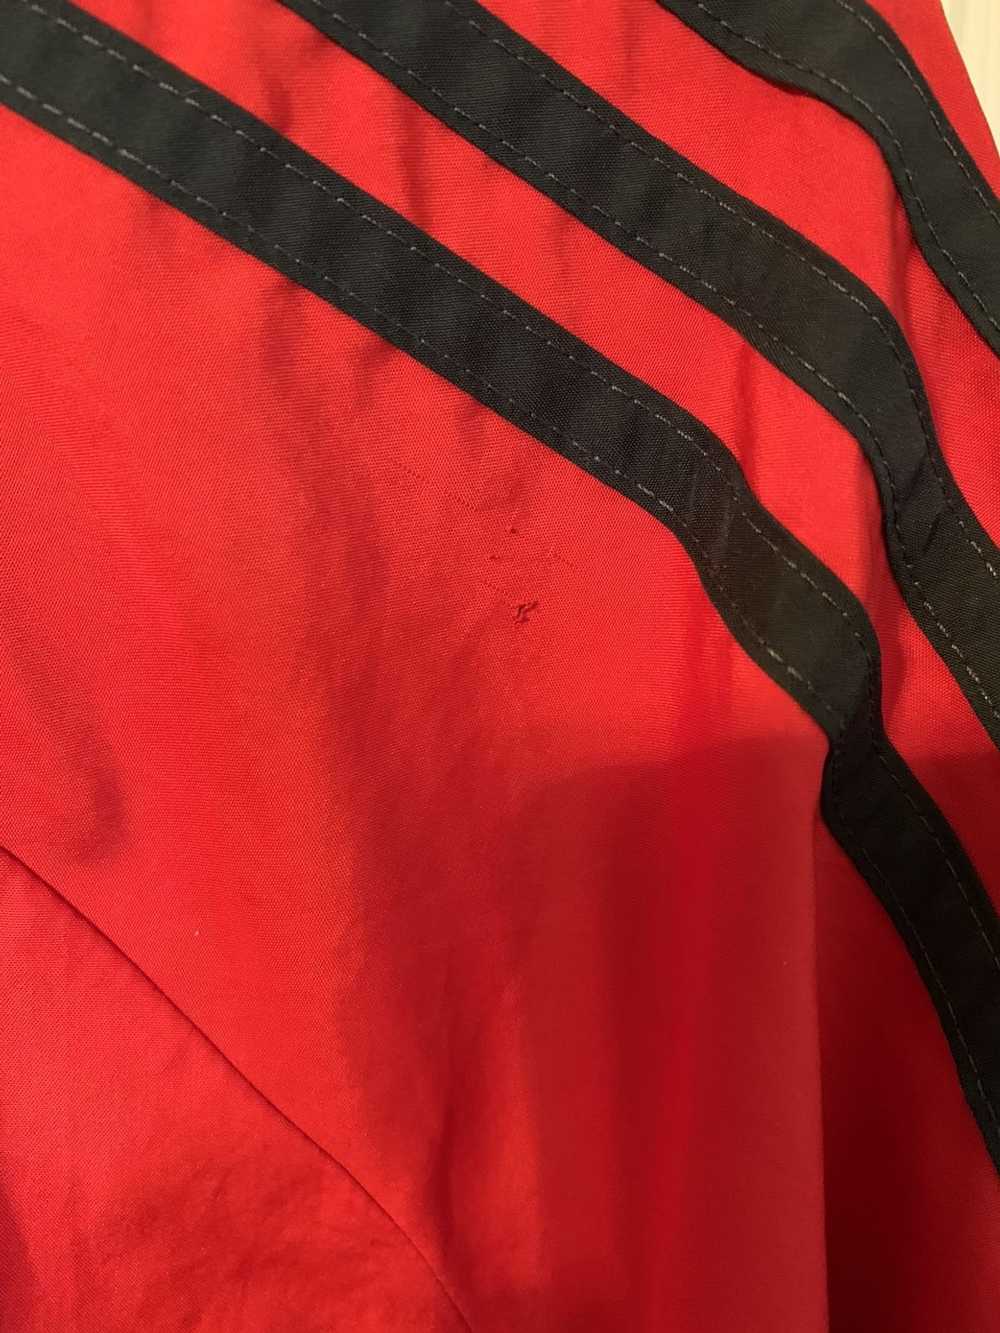 Adidas × Vintage Vintage red adidas zip up jacket - image 6